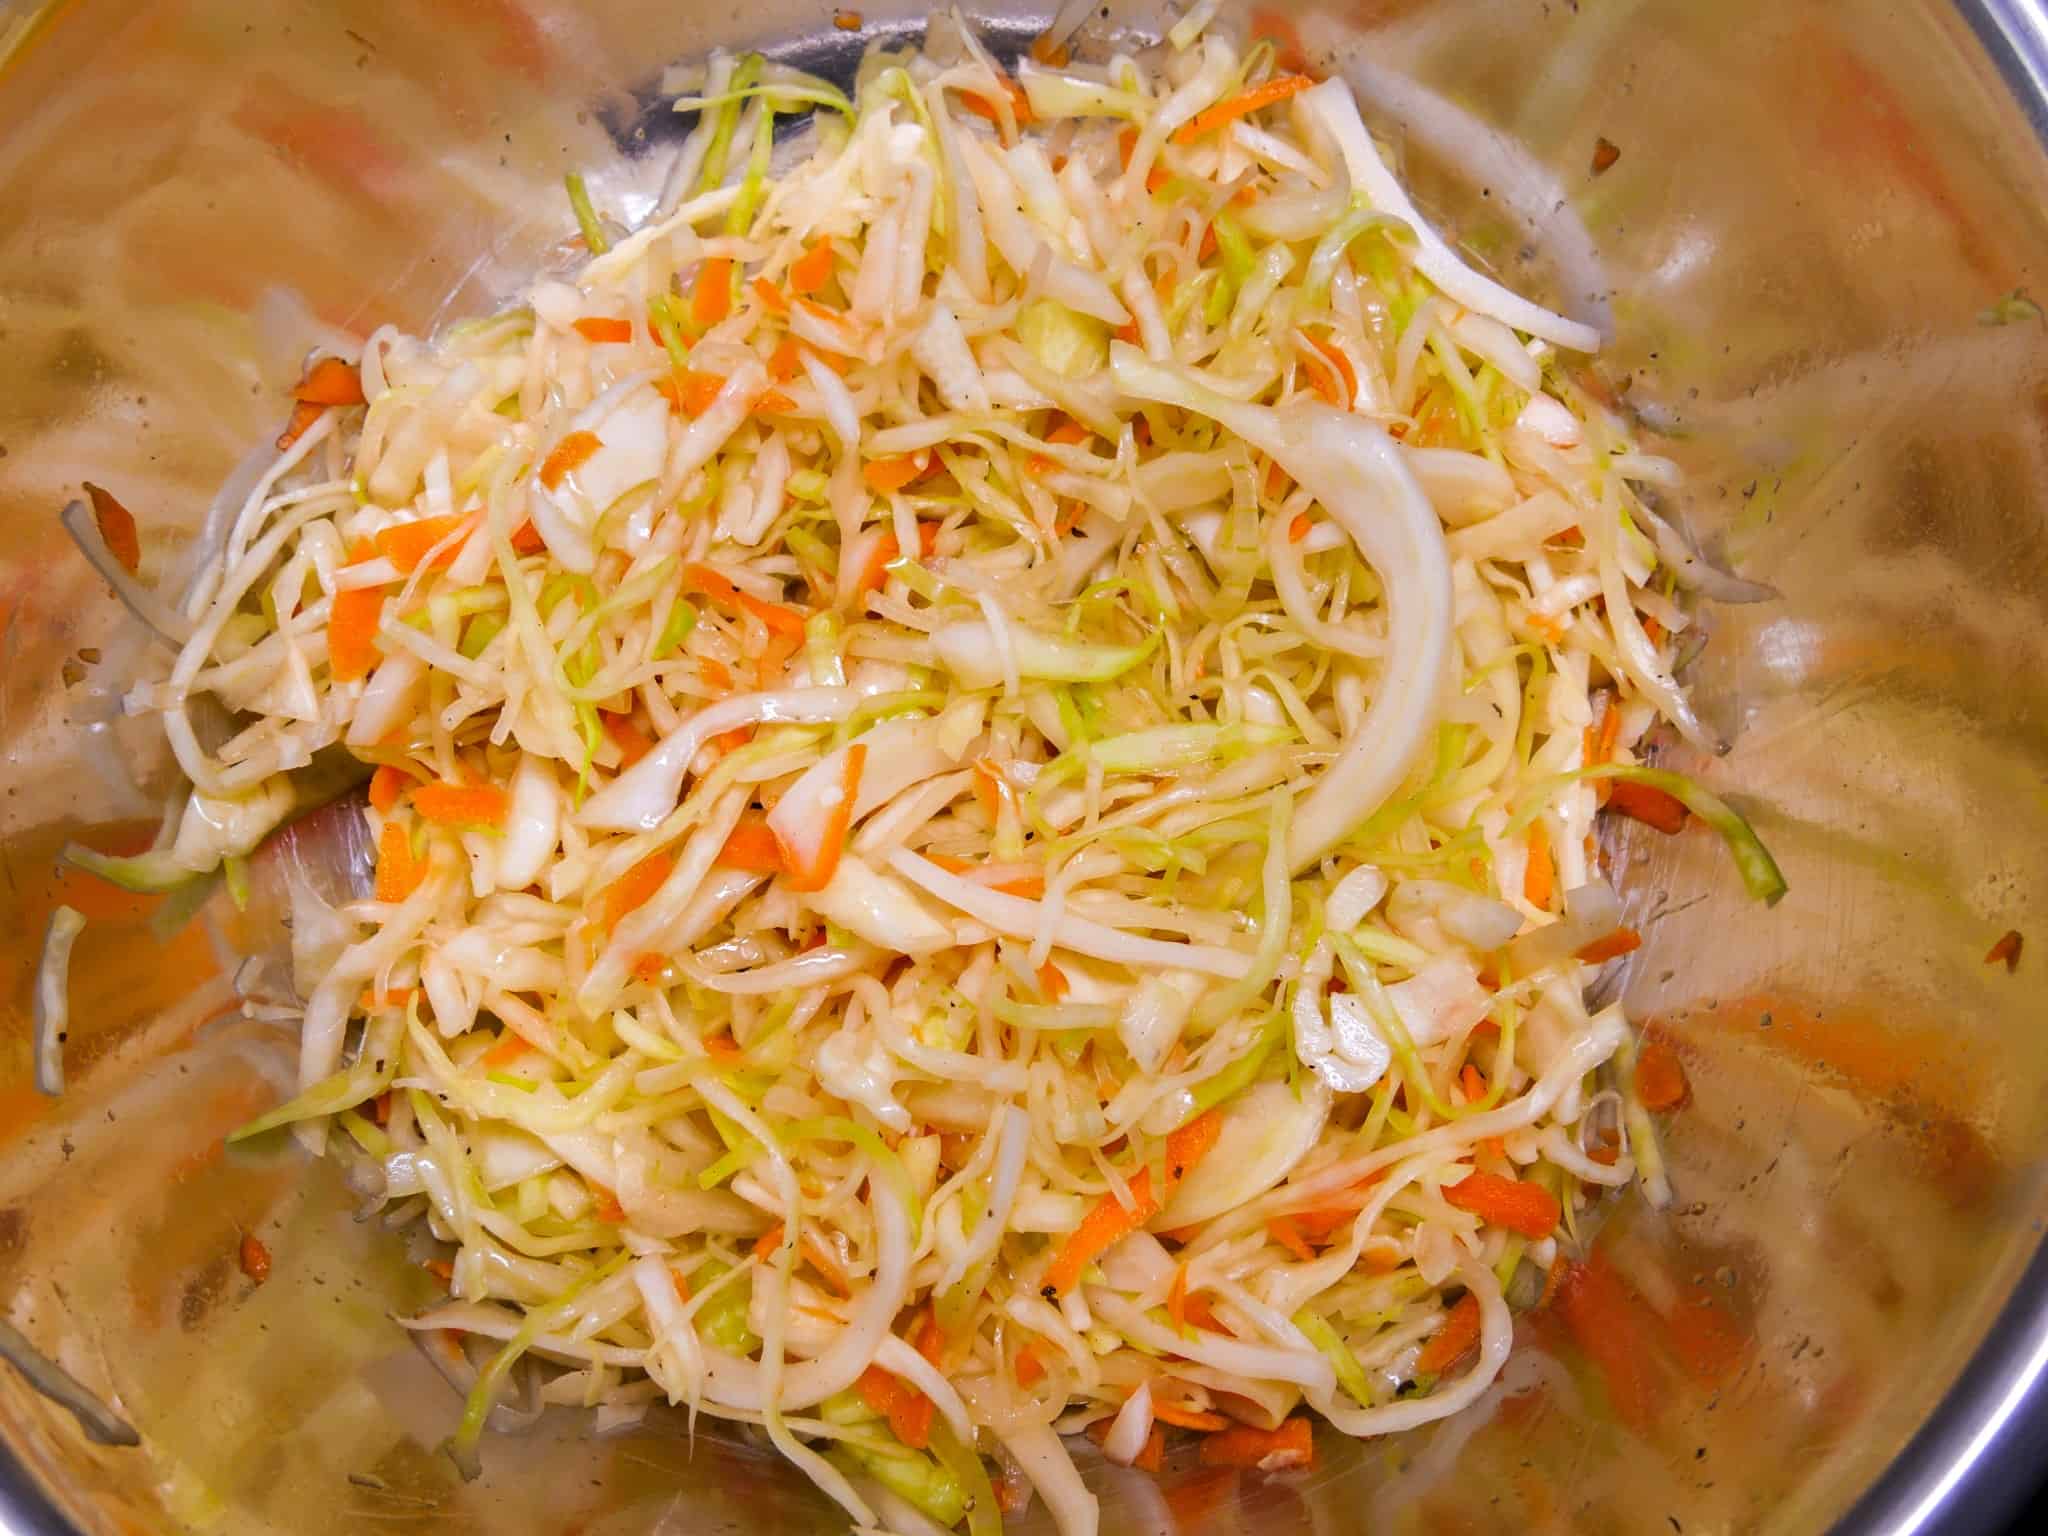 Coleslaw Salat als Beilage zu den Sous-Vide gegarten Spareribs